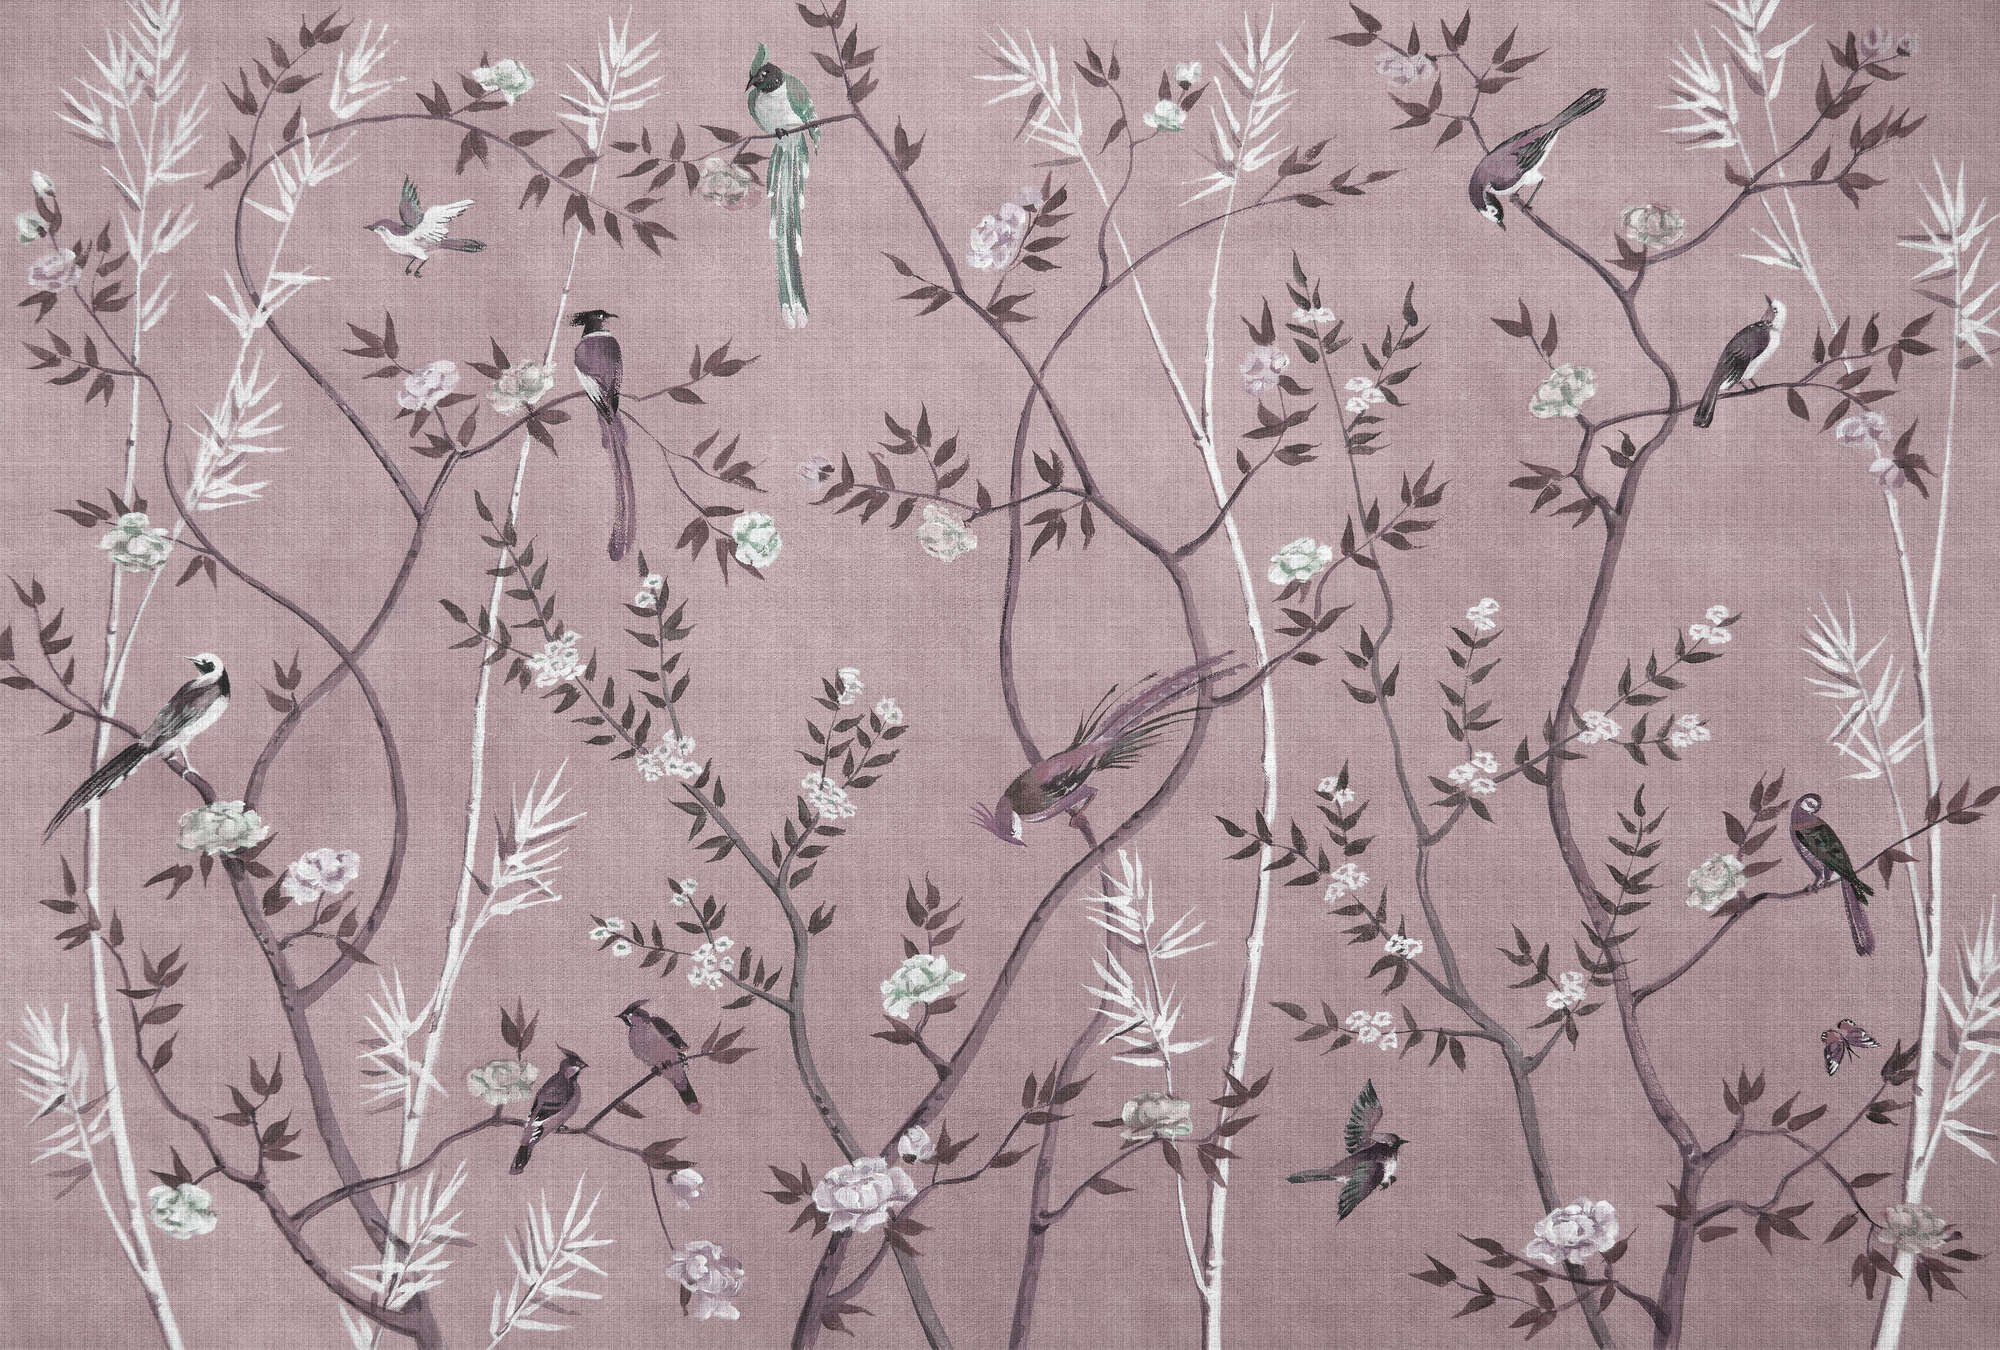             Tea Room 3 – Fototapete Vögel & Blüten Design in Rosa & Weiß
        